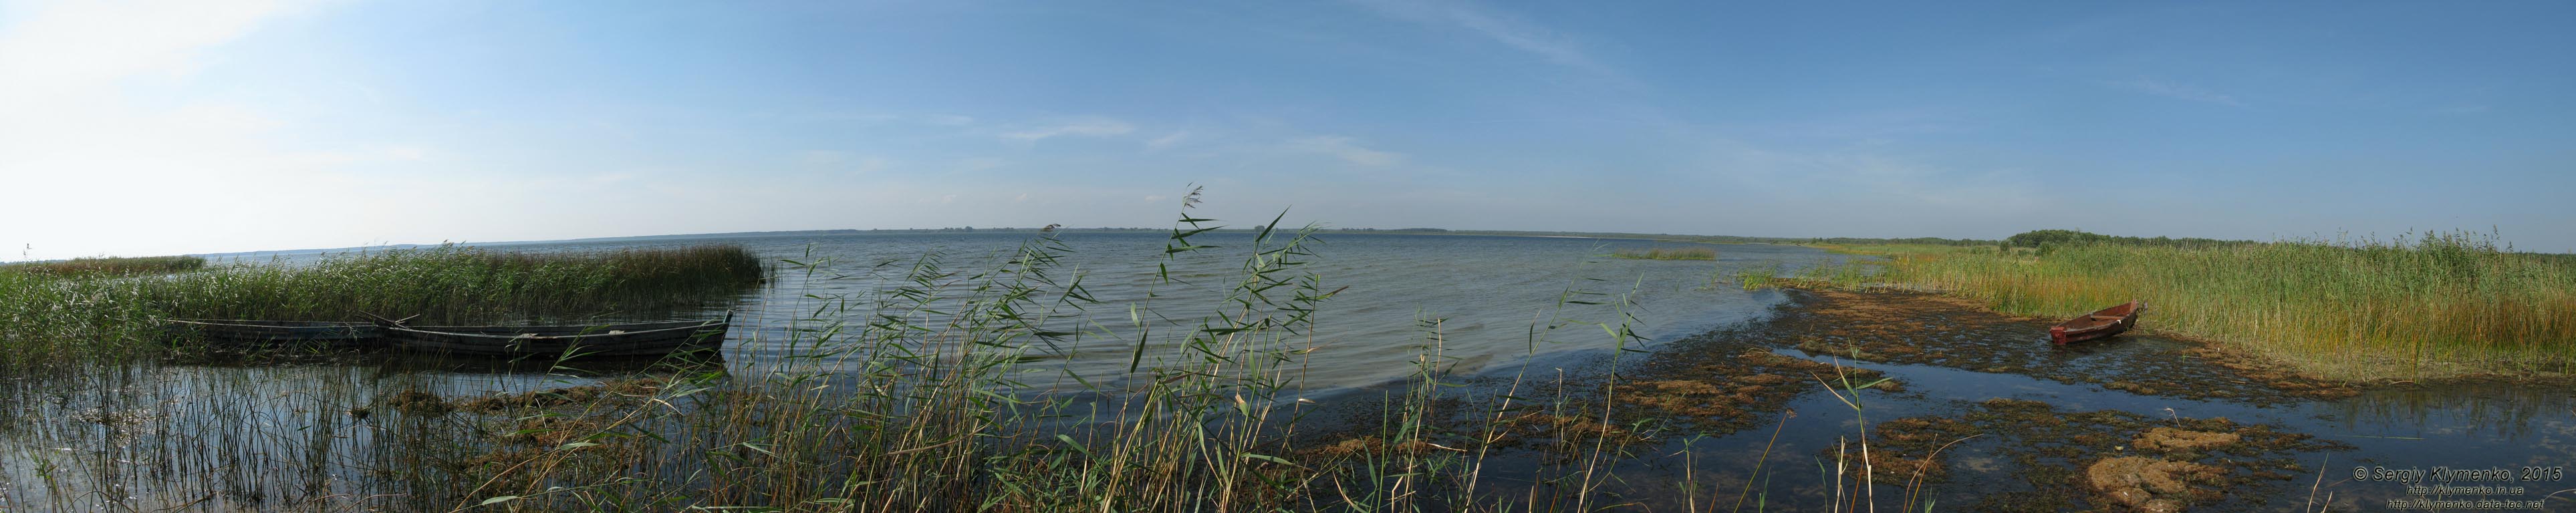 Волынь, Шацкие озёра. Фото. Живописный вид Пулемецкого озера. Панорама ~210° (51°31'46.00"N, 23°45'48.00"E).